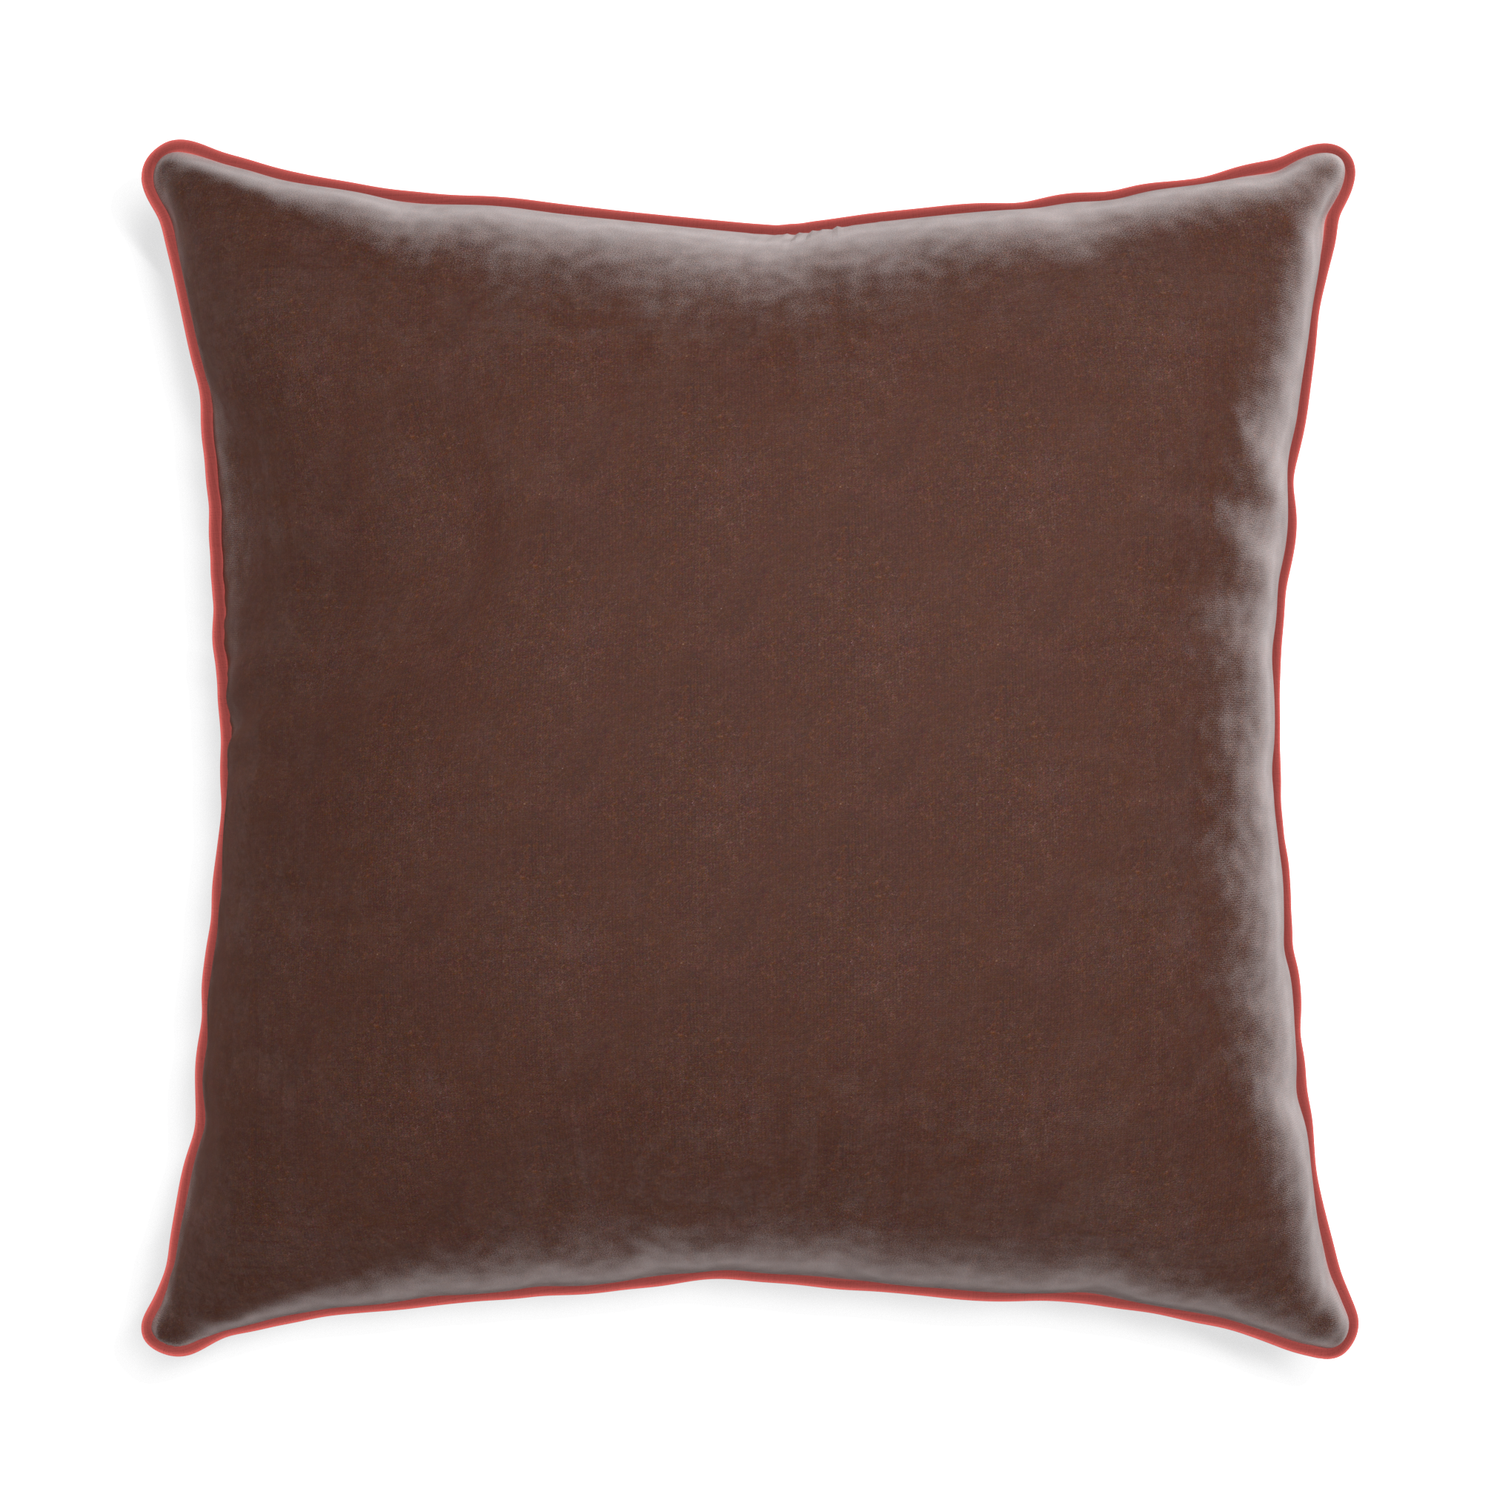 Euro-sham walnut velvet custom pillow with c piping on white background